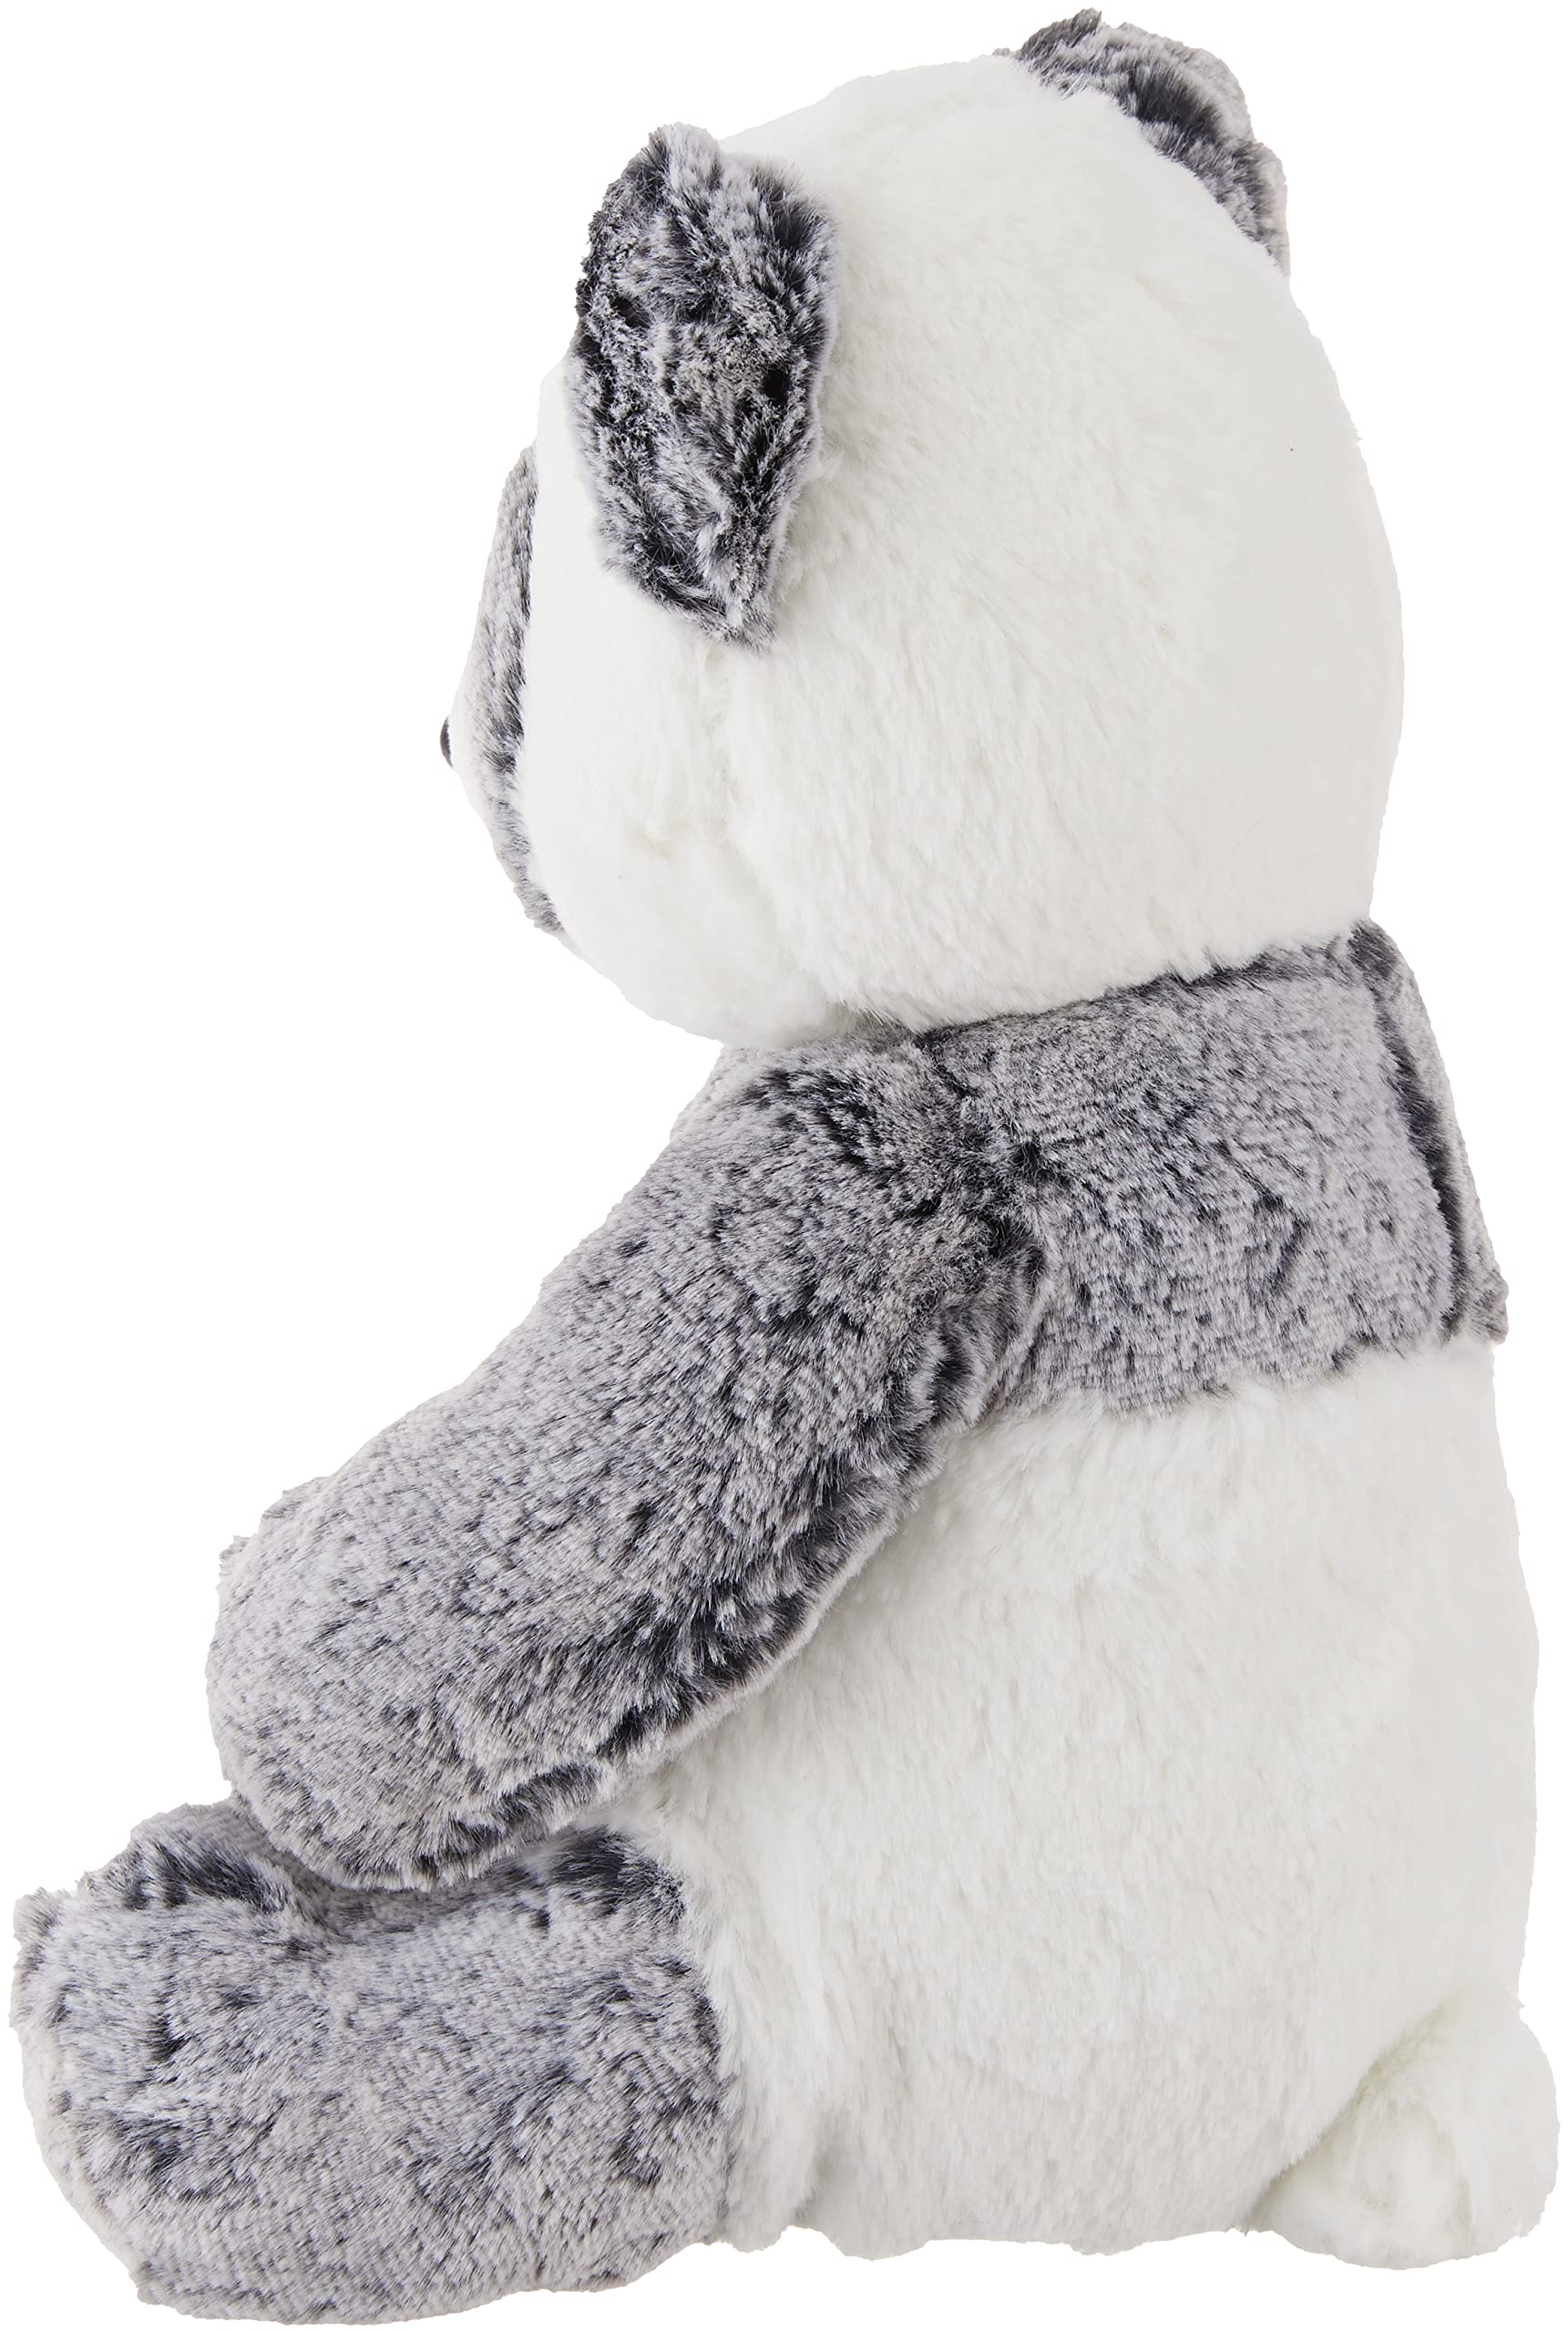 Aurora® Snuggly Sweet & Softer™ Ping Panda™ Stuffed Animal - Comforting Companion - Imaginative Play - White 12 Inches